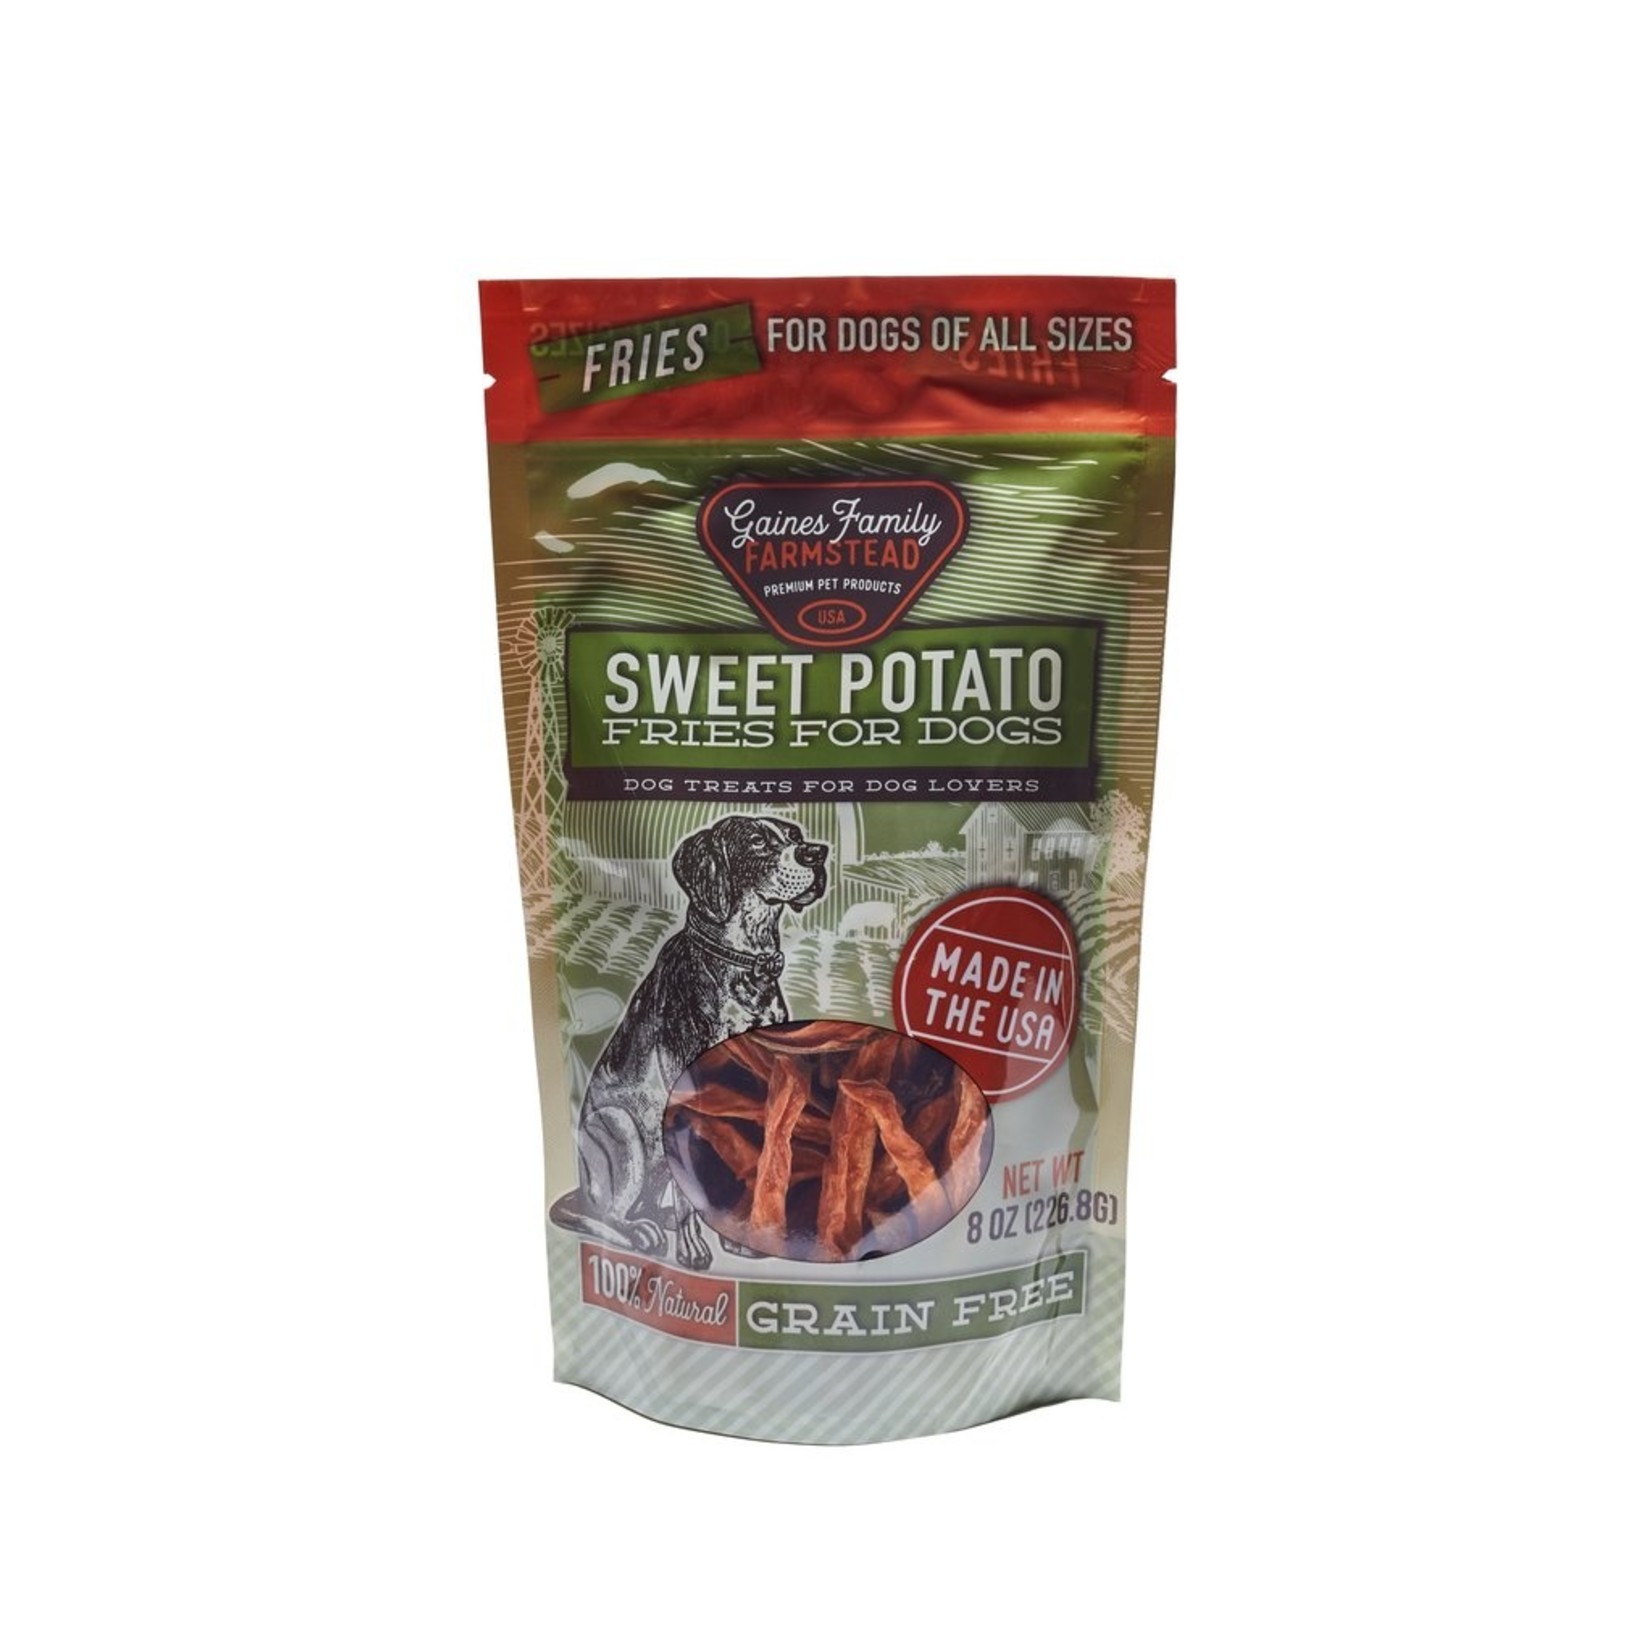 Gaines Family Gaines Family Farmstead Sweet Potato Fries Dog Treats